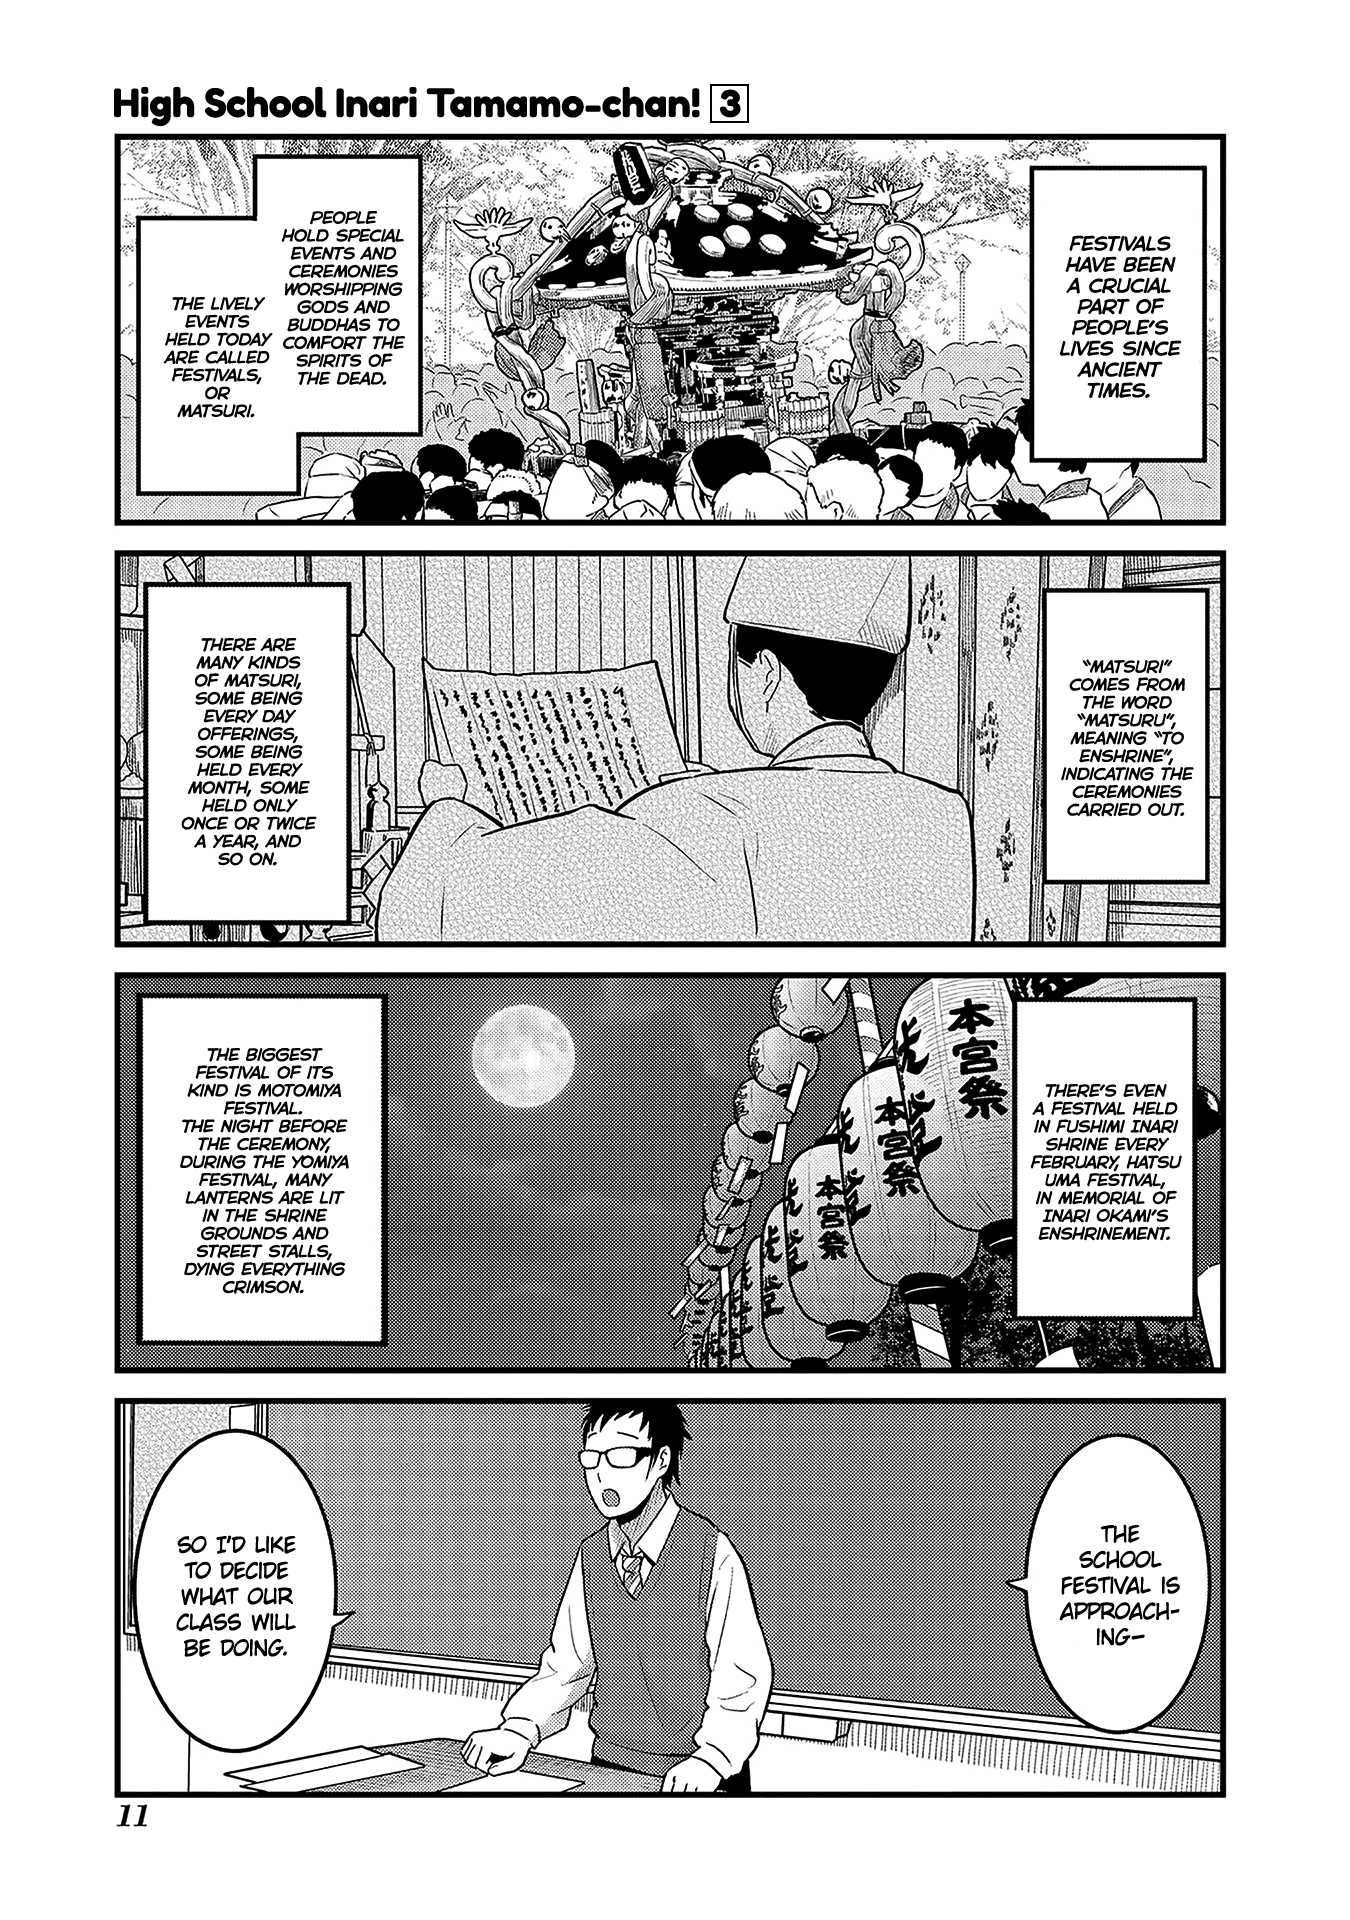 High School Inari Tamamo-Chan! - Page 1